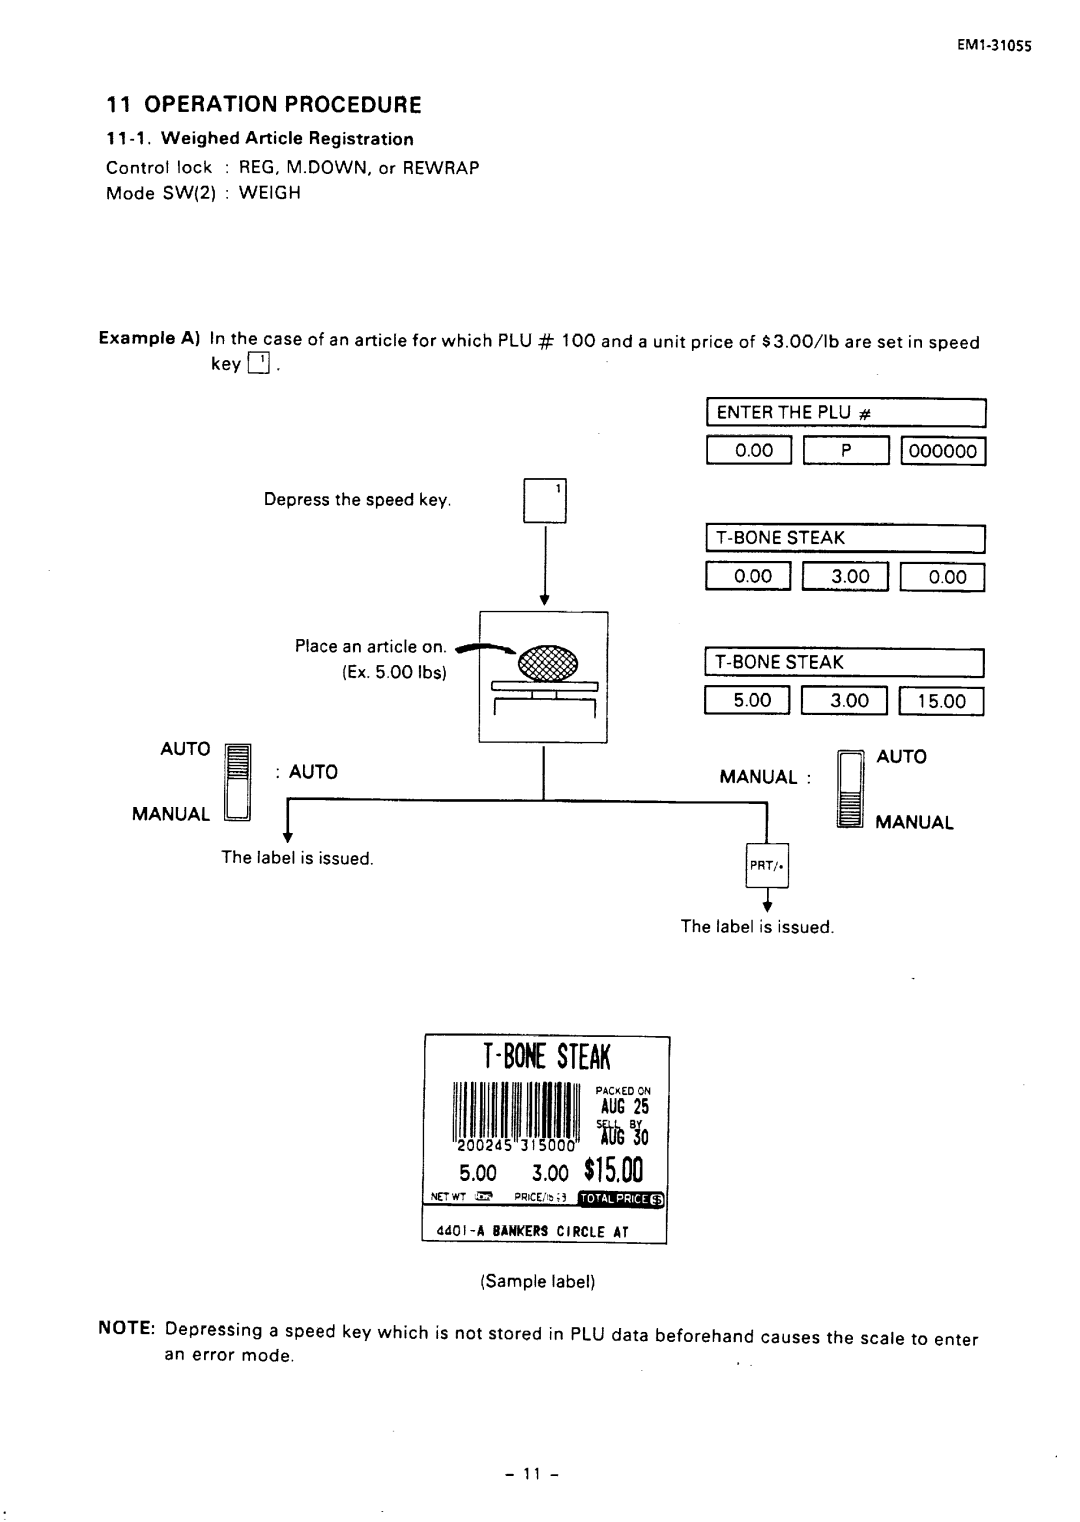 Toshiba SL66 SERIES, EMl-31055 manual Operation Procedure 